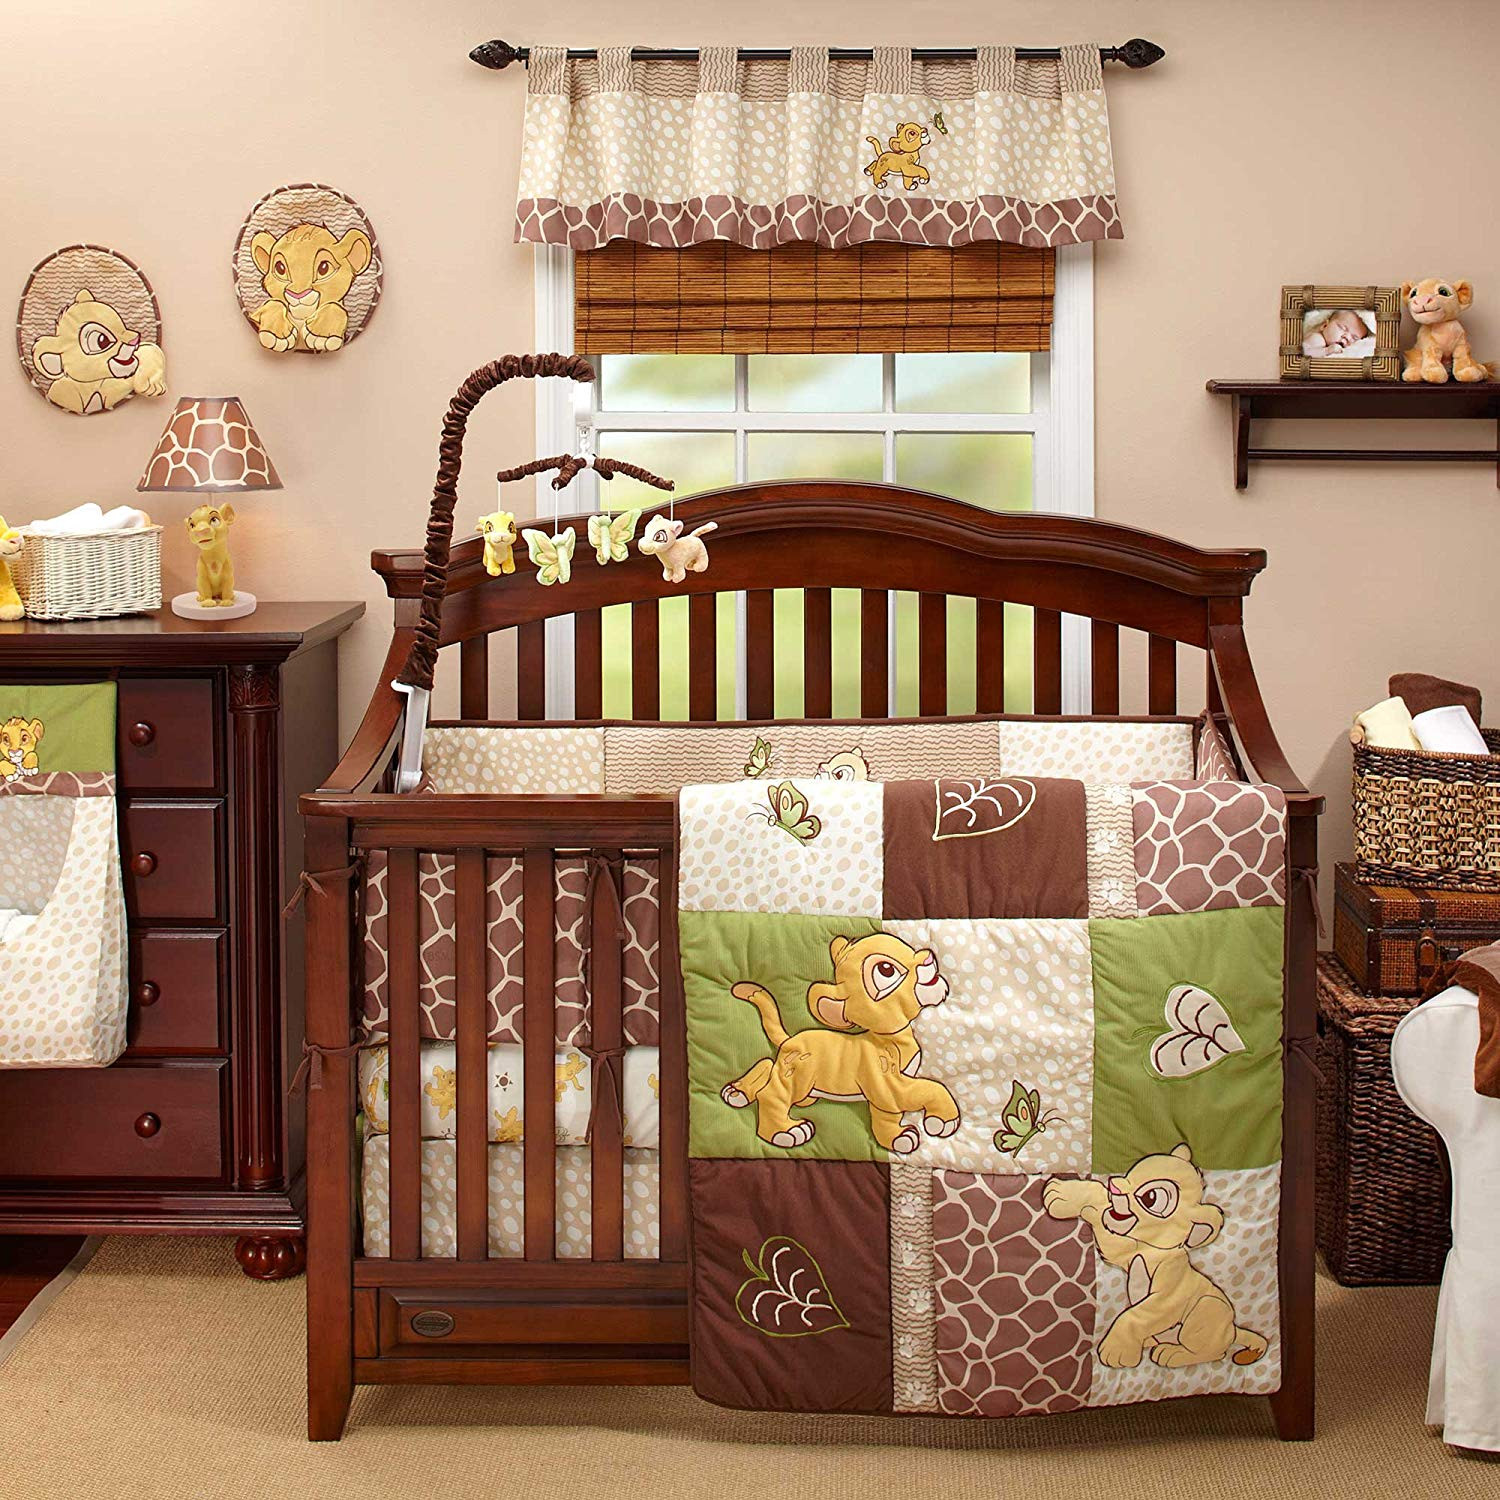 Baby Crib Decor
 Lion King Go Wild Baby Bedding and Decor Baby Bedding